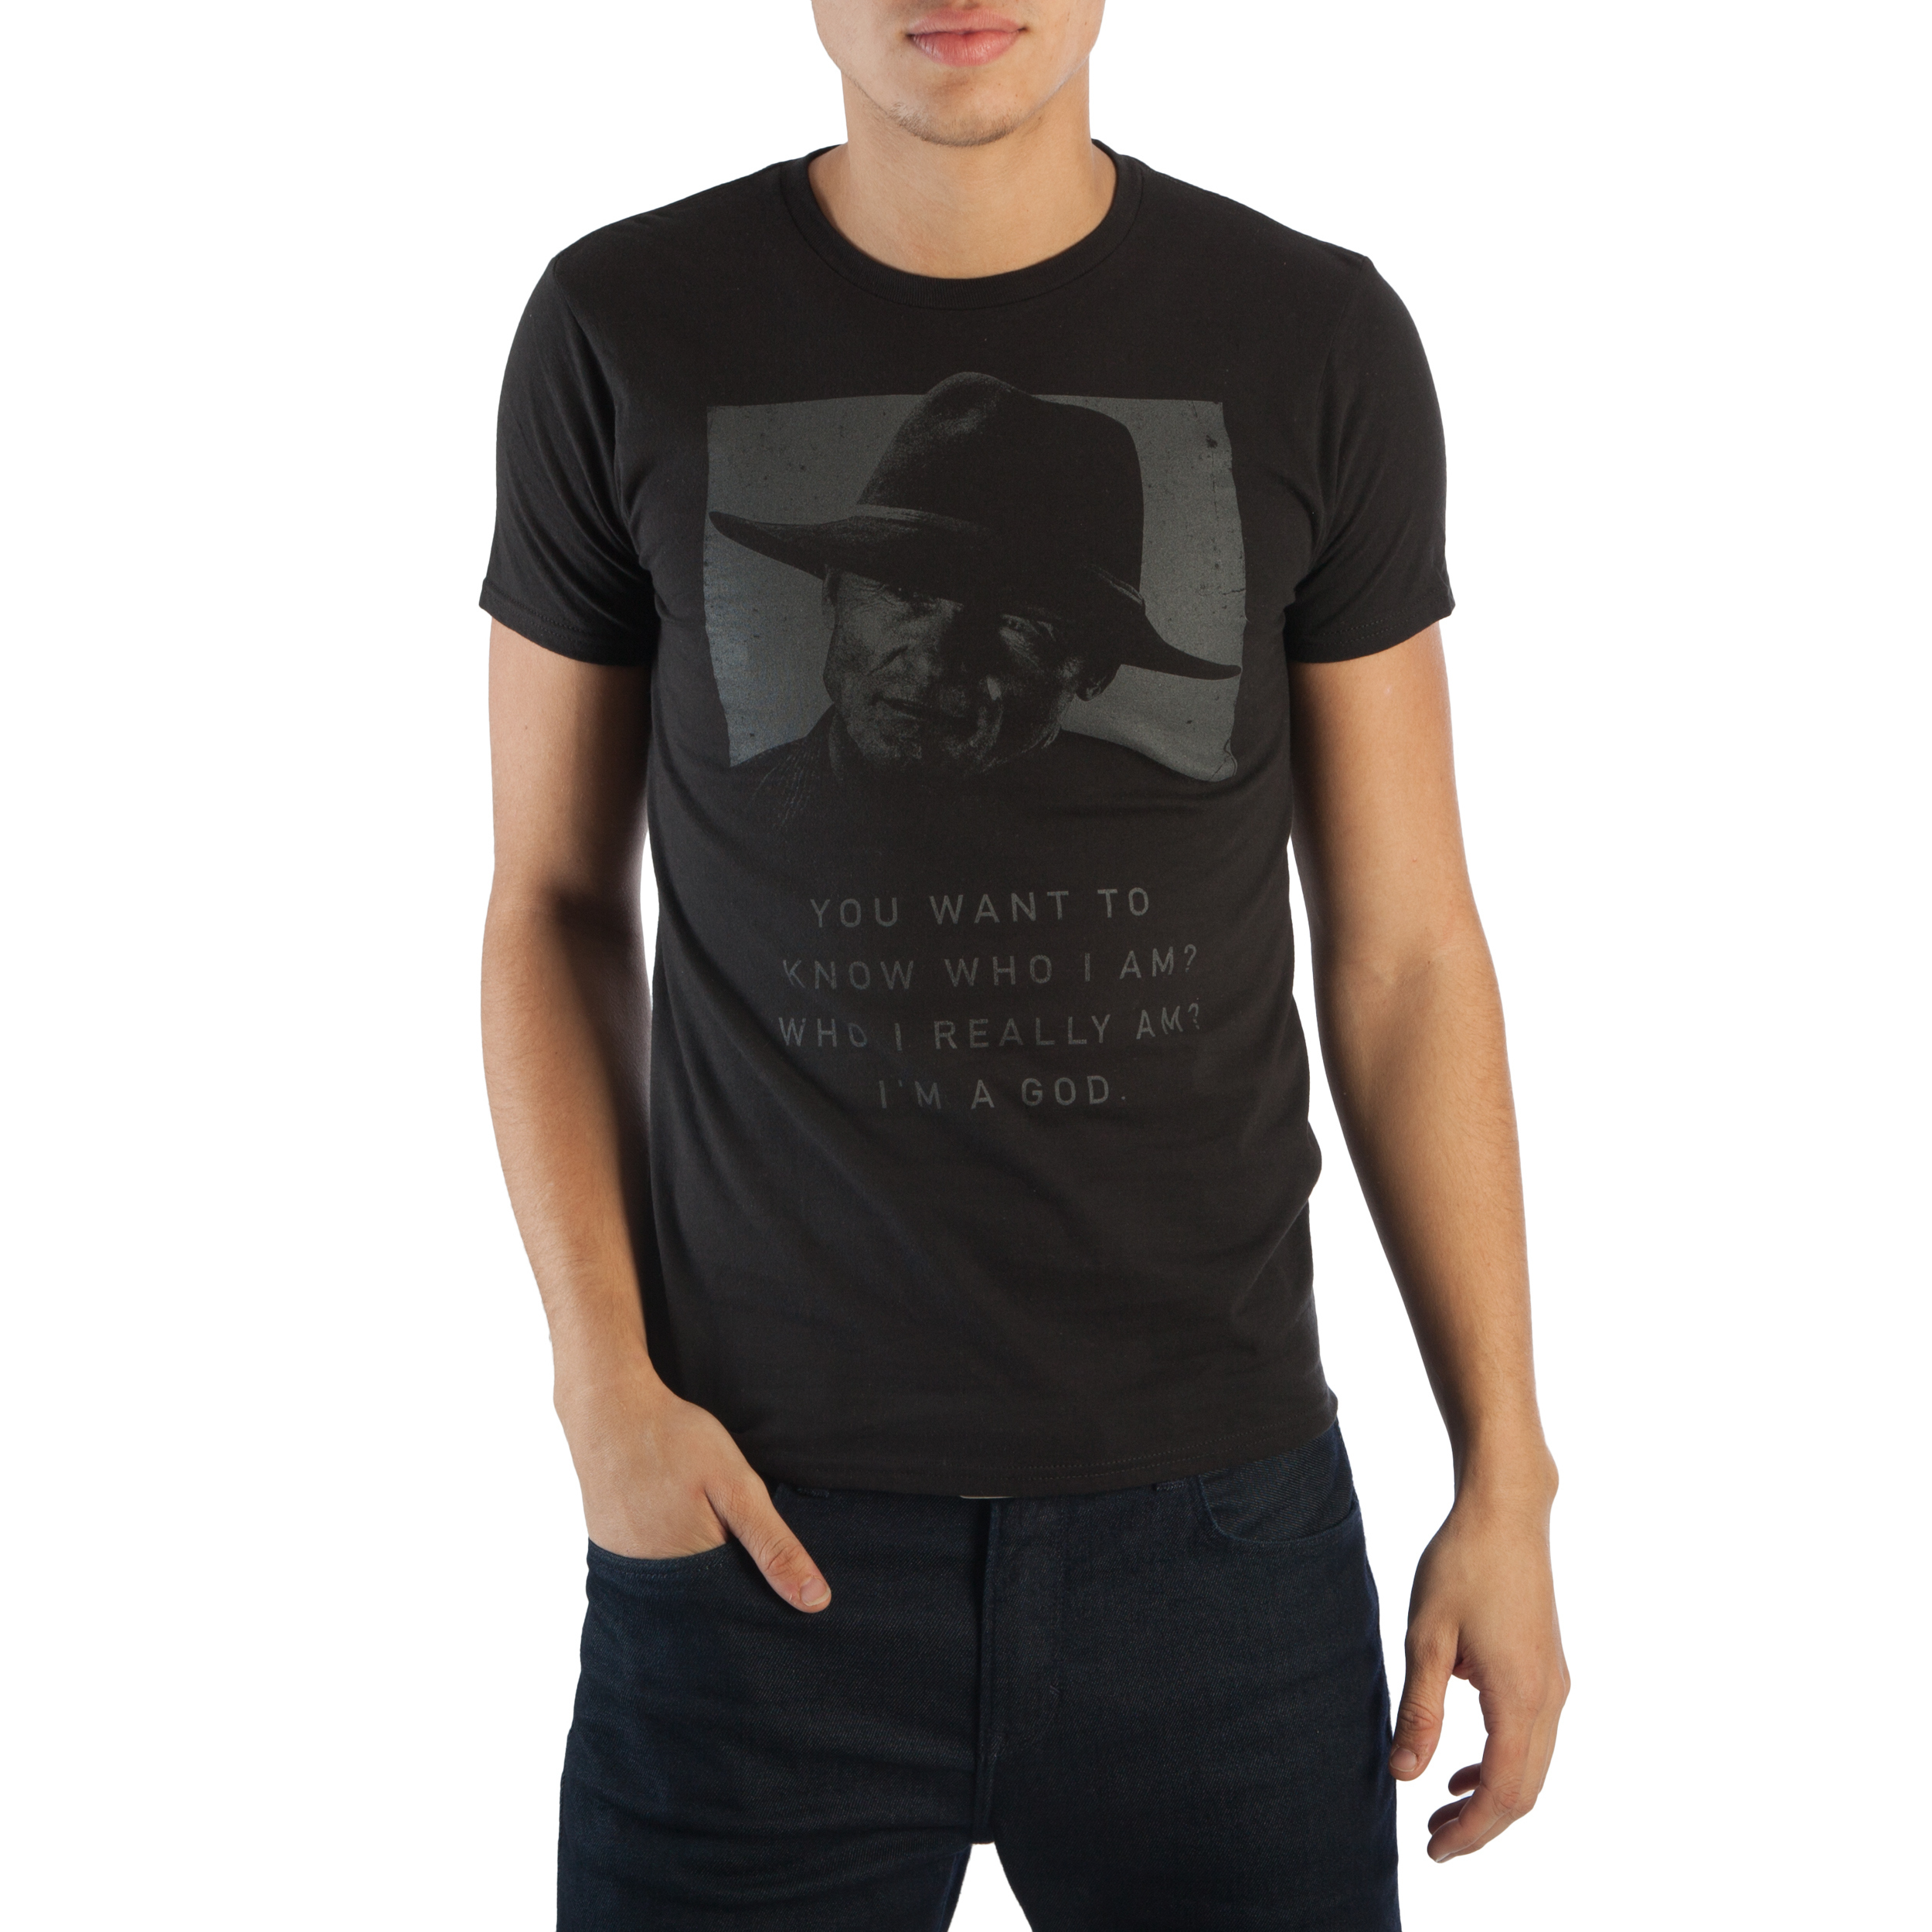 WestWorld Man In Black Ed Harris You Want To Know Who I Am' Who I Really Am' I'm A God. Men's Black T-Shirt-Medium - image 1 of 2